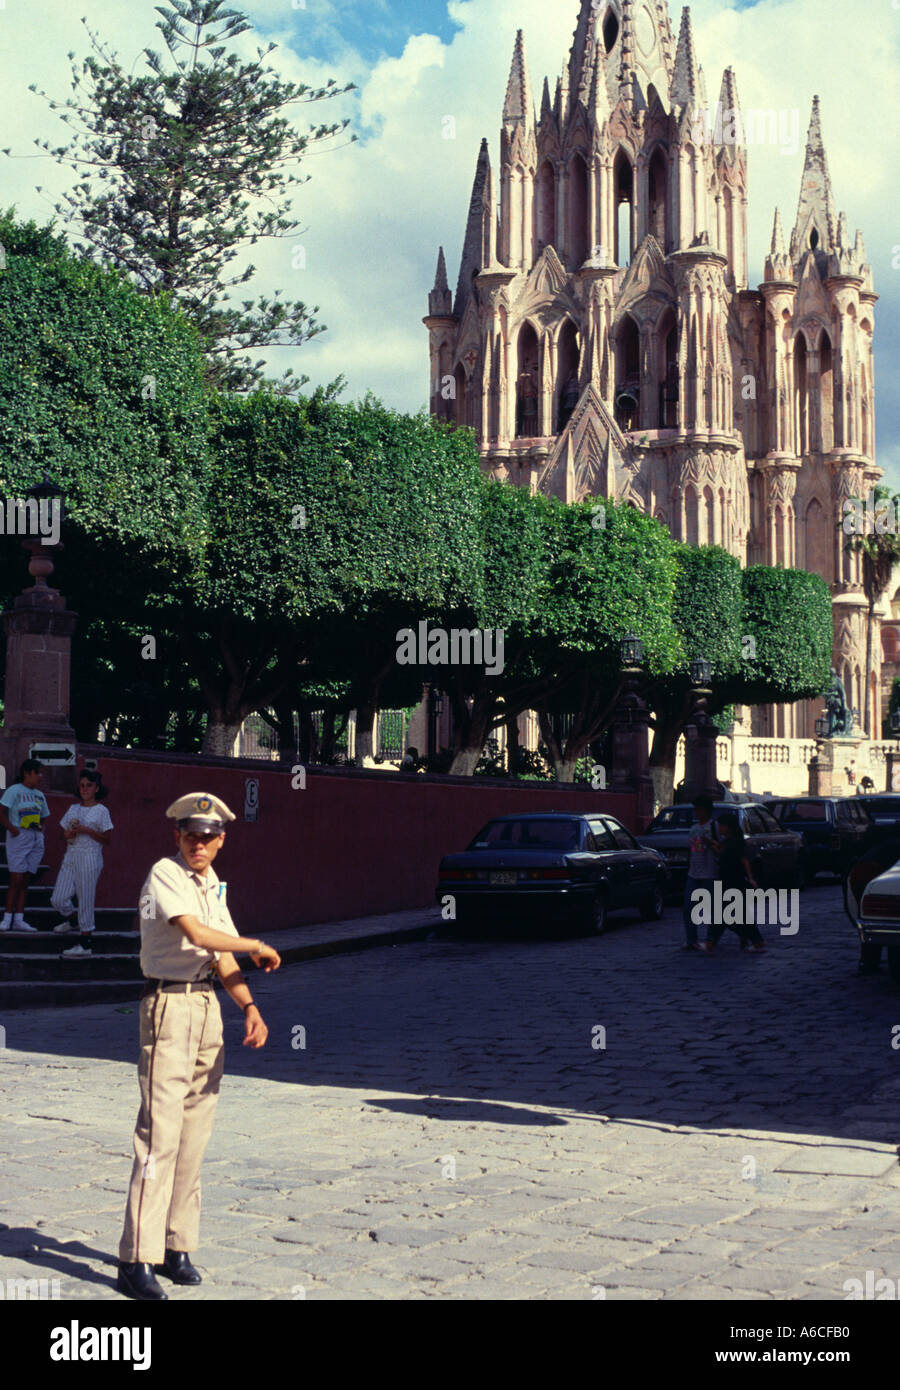 La Parroquia and zocalo town square San Miguel de Allende Mexico Stock Photo